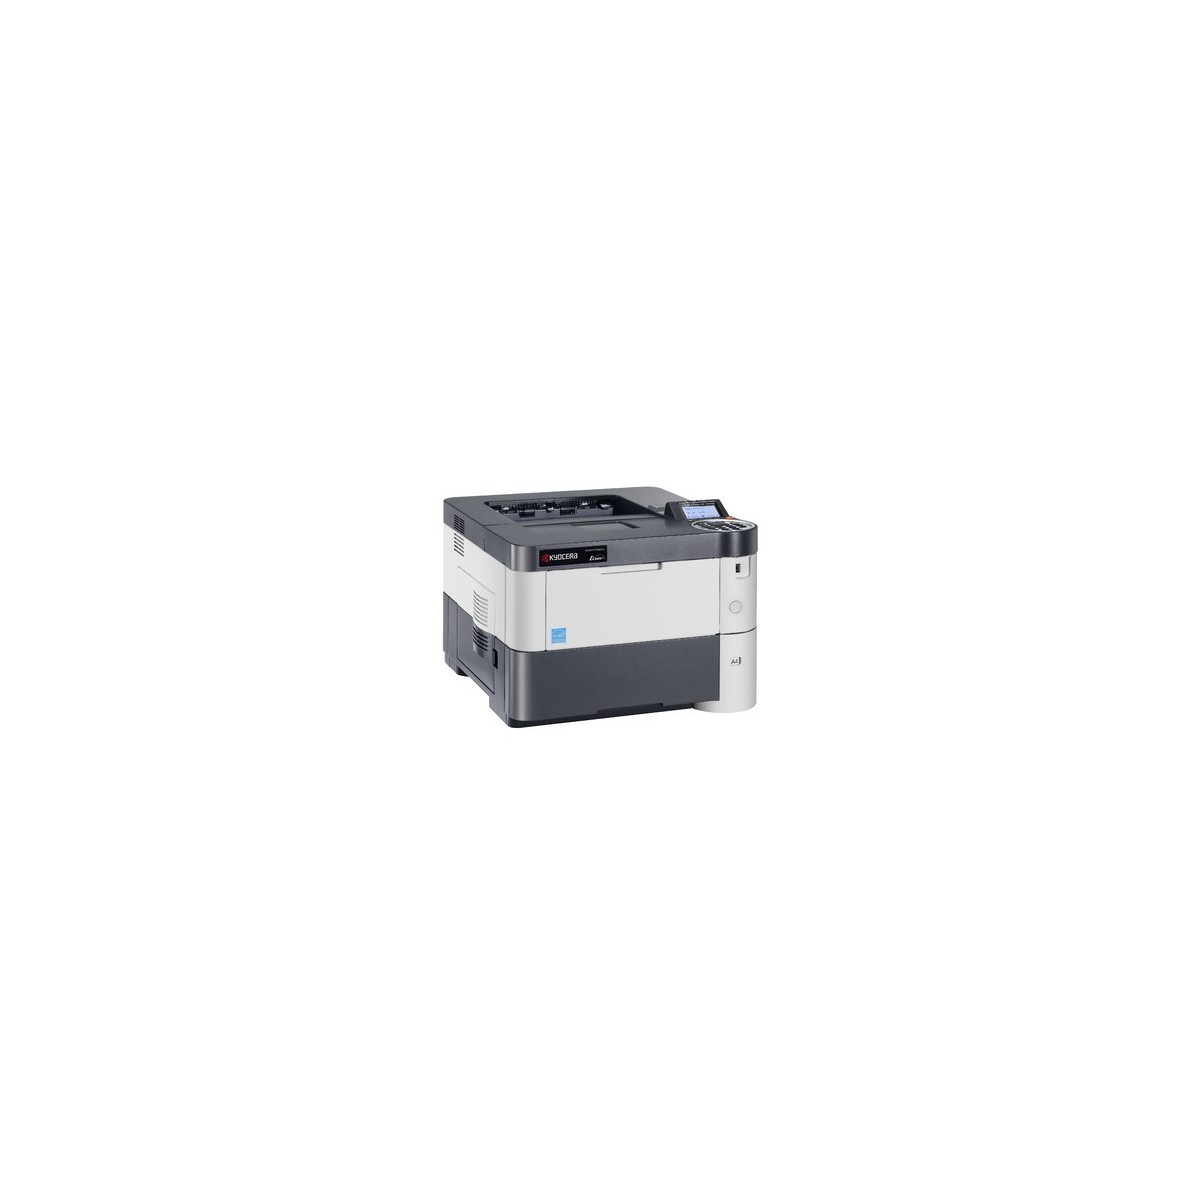 Kyocera ECOSYS P3045dn - Laser - 1200 x 1200 DPI - A4 - 45 ppm - Duplex printing - Network ready